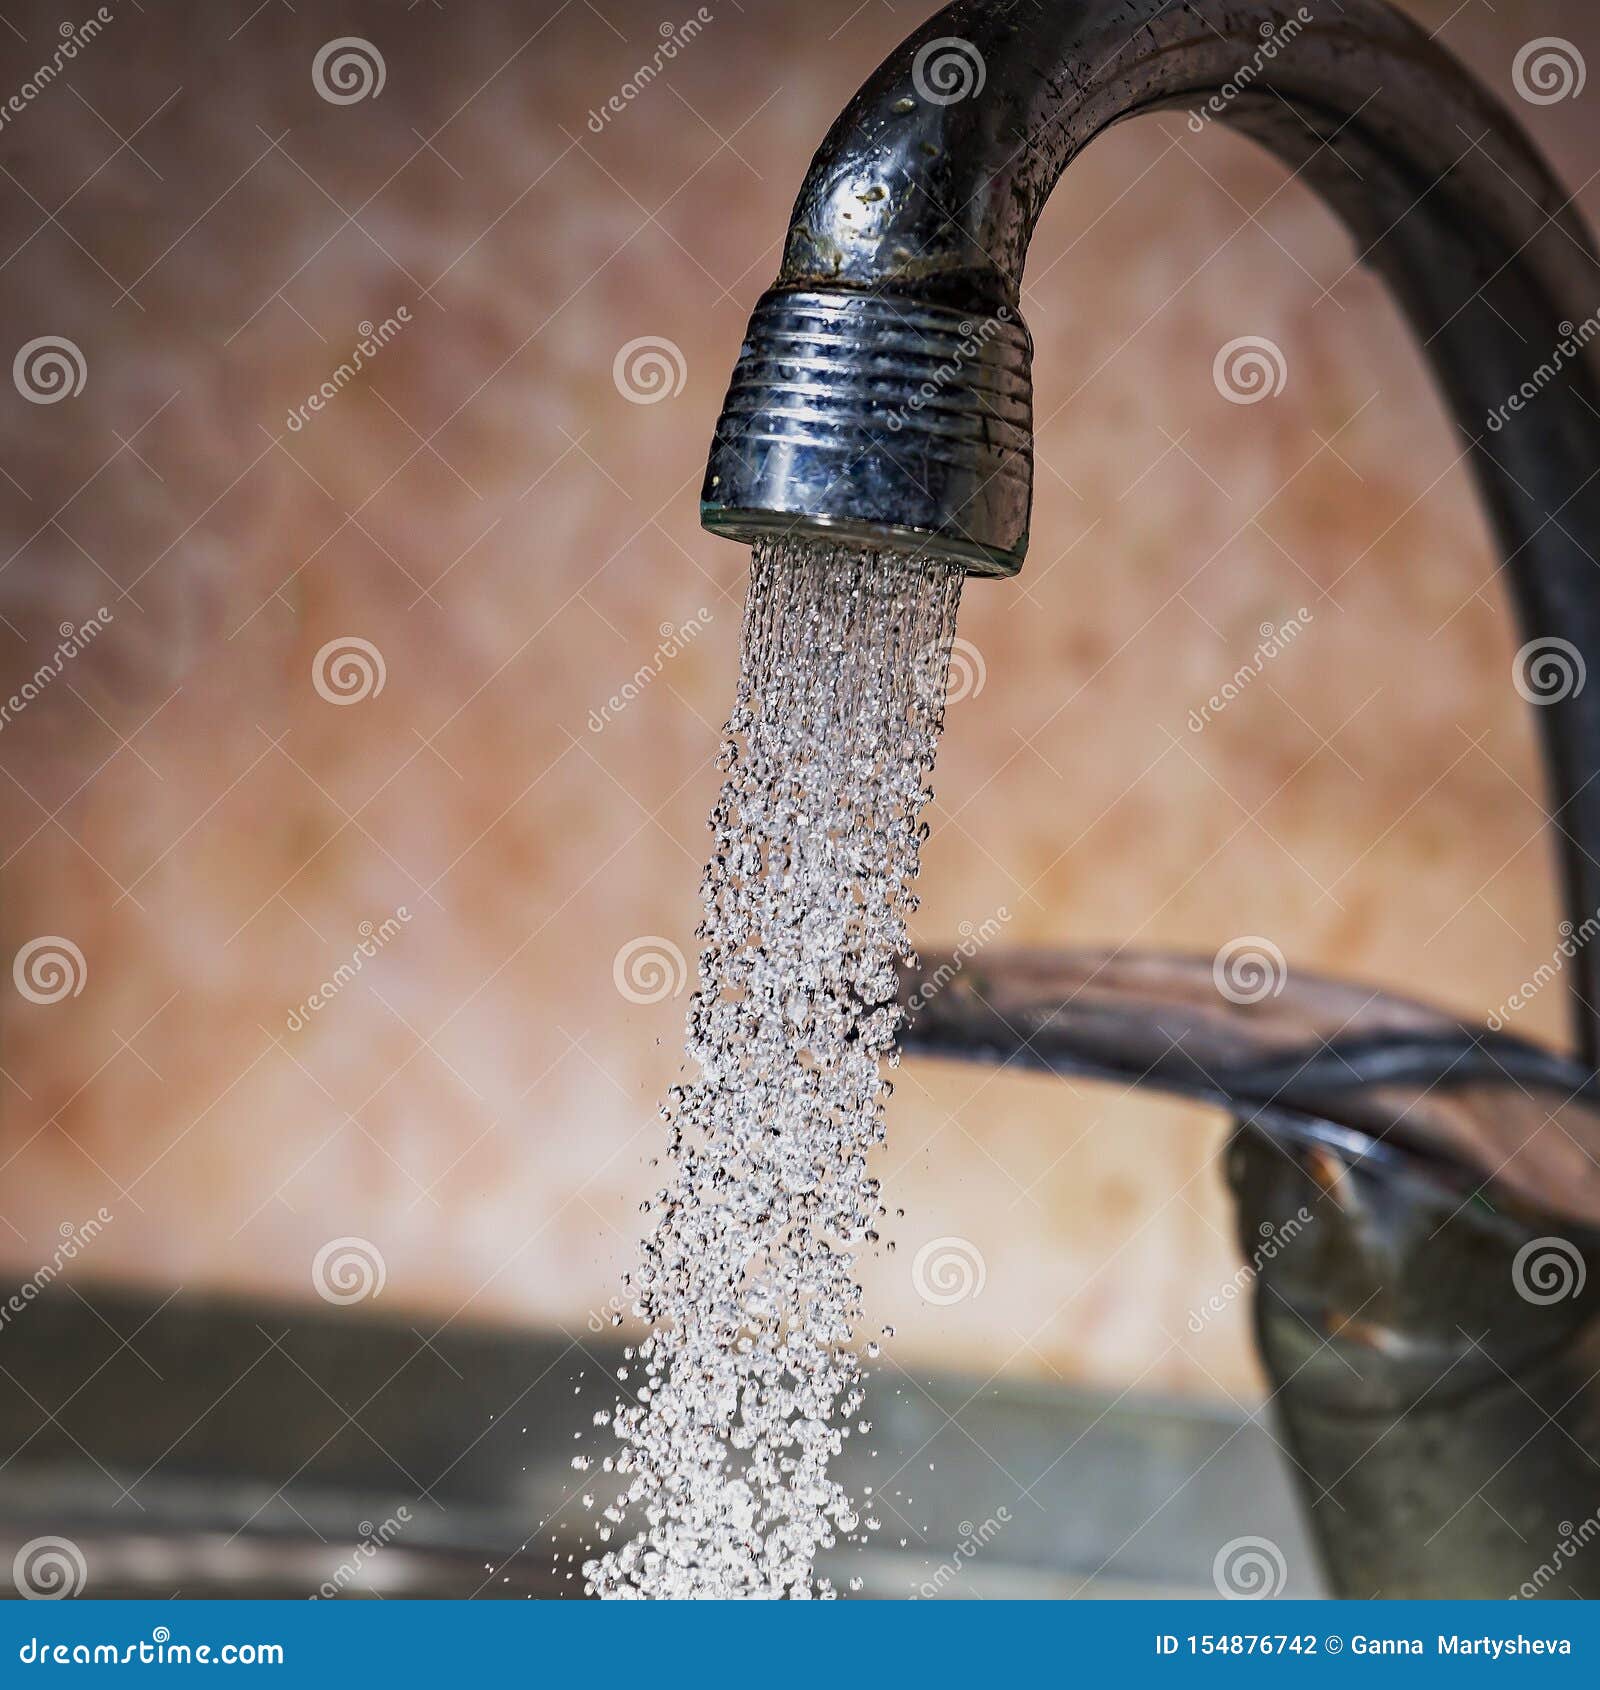 Stainless Steel Water Pressure Water Flow Drinking Faucet